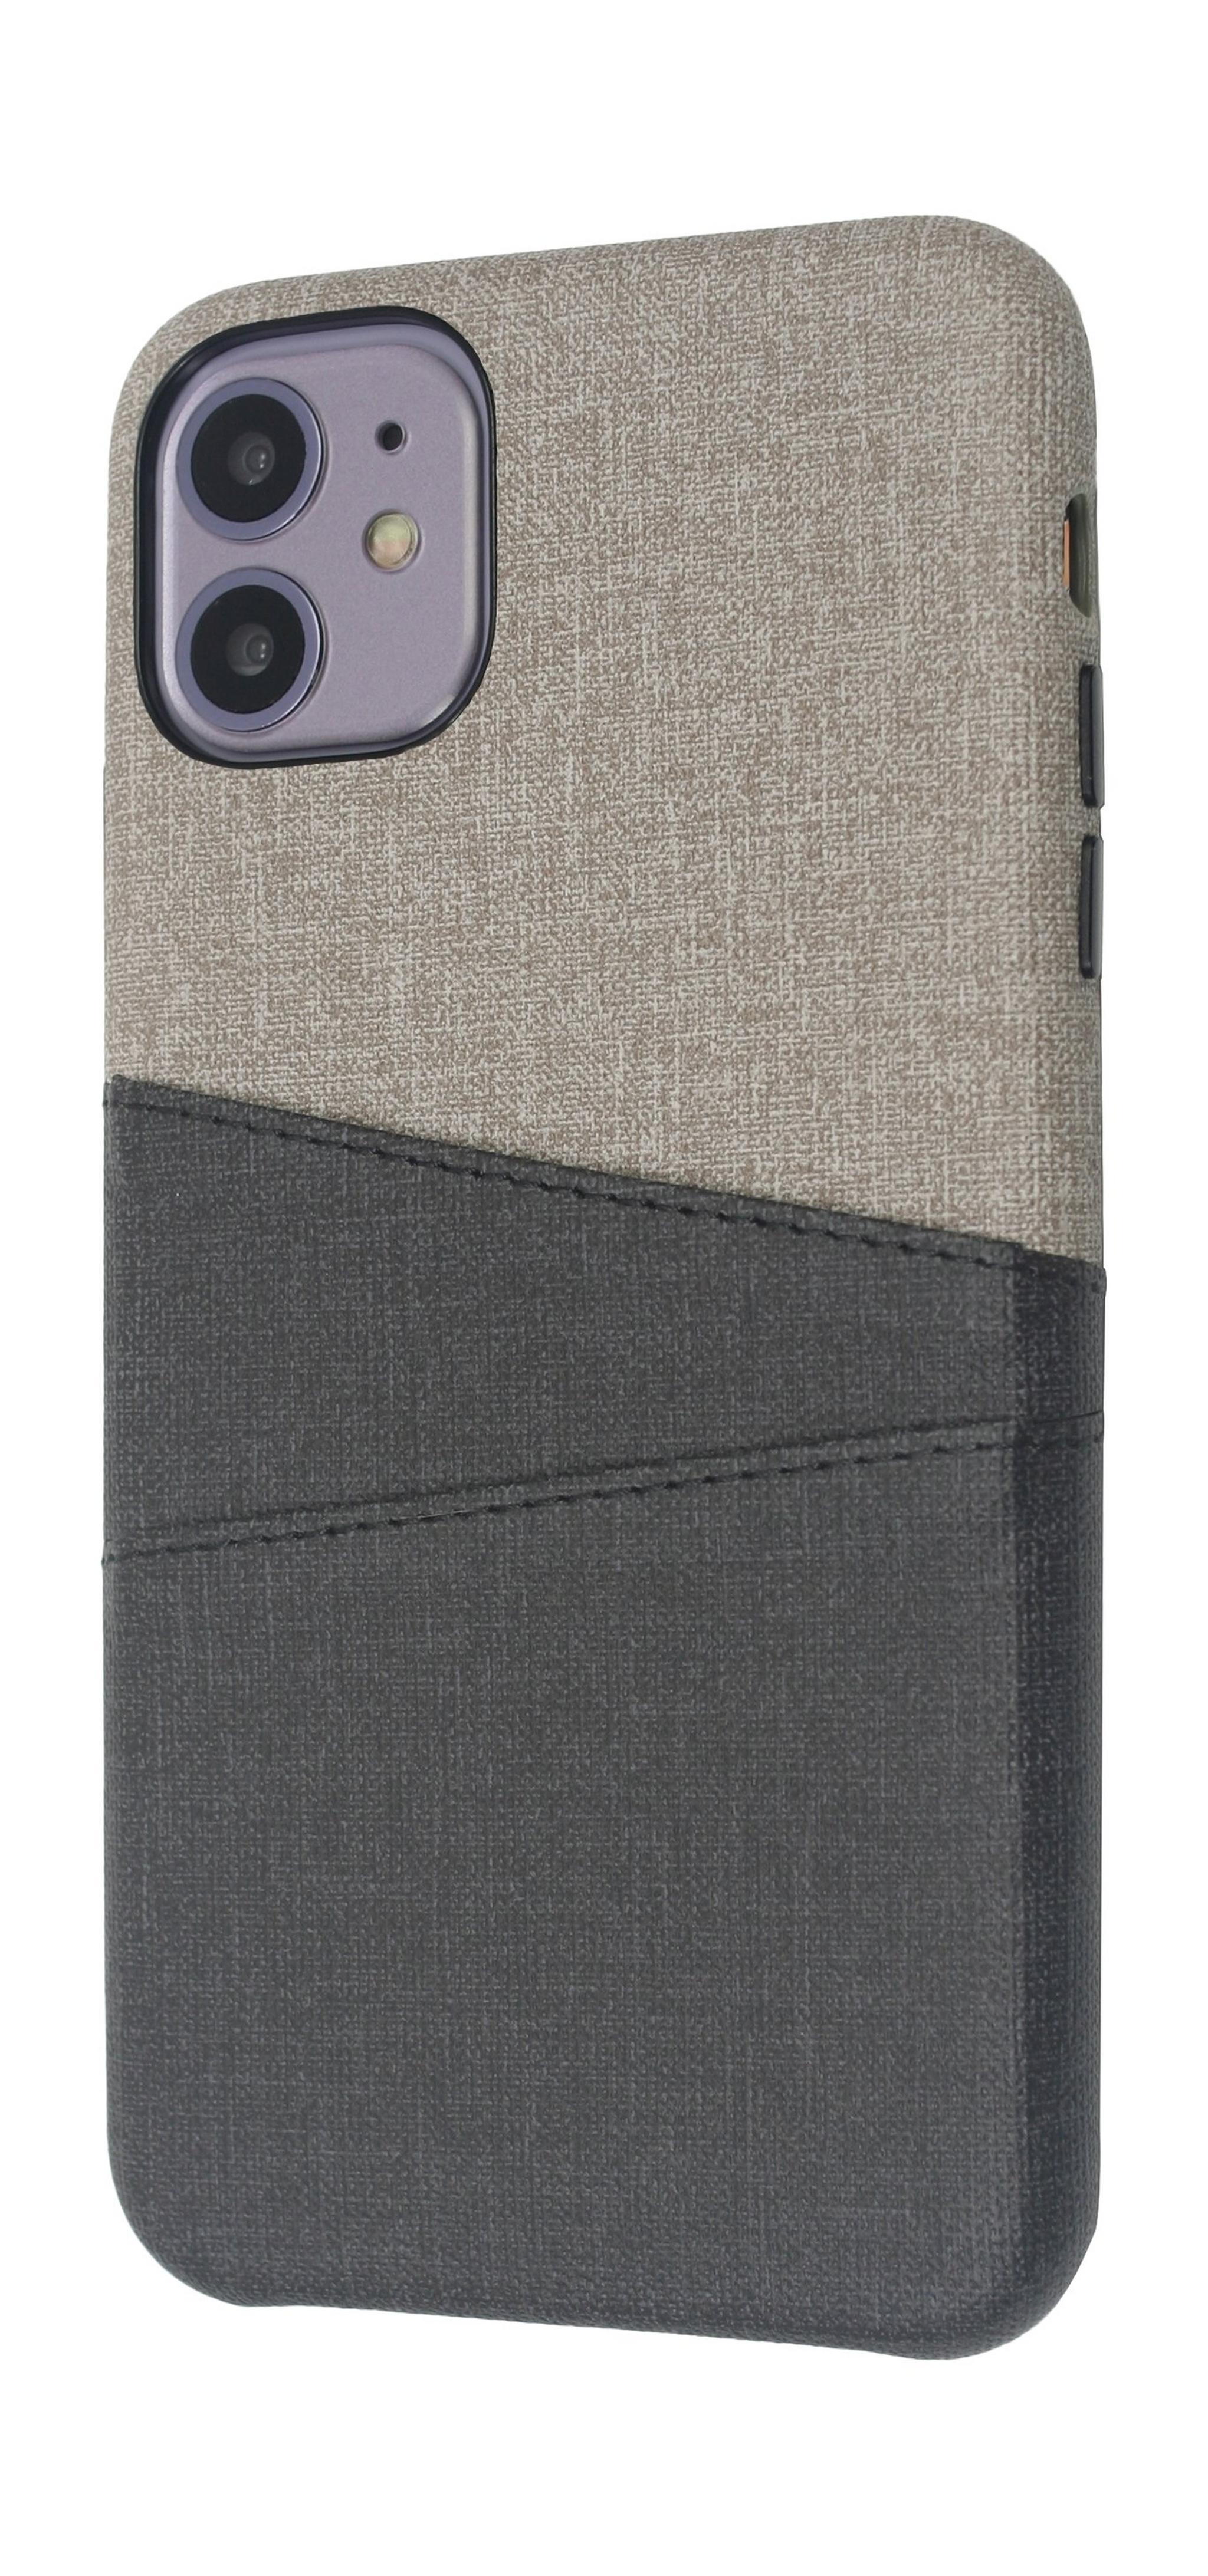 EQ iPhone 11 Blank Pocket Back Case - Grey/Black